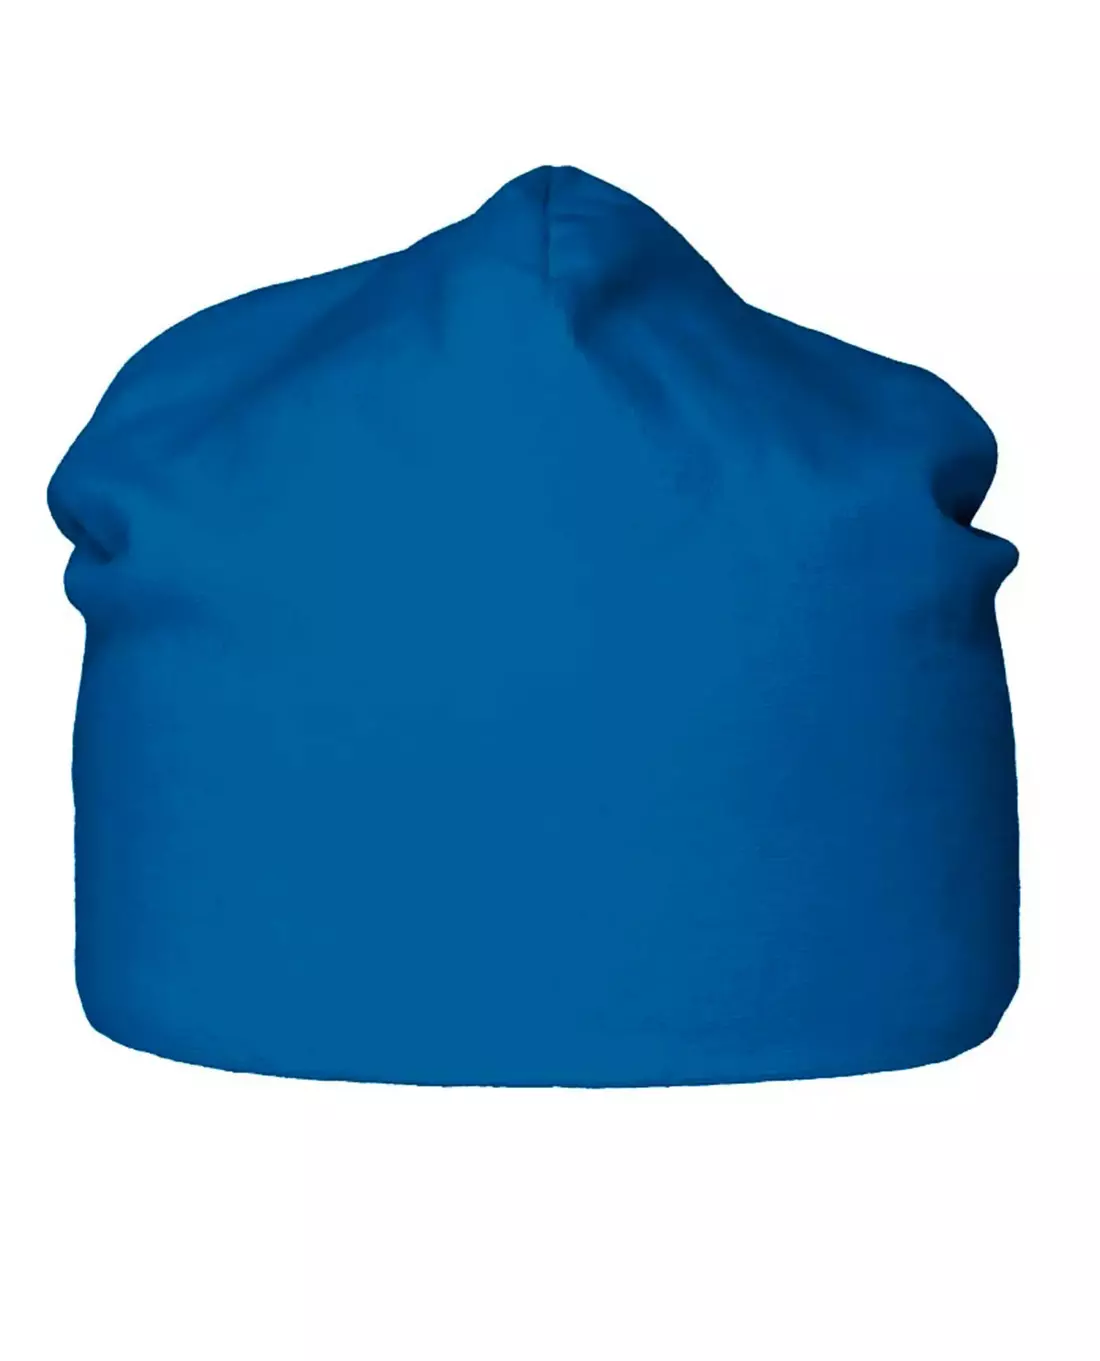 Puijo pipo LONG (28 cm), Sininen